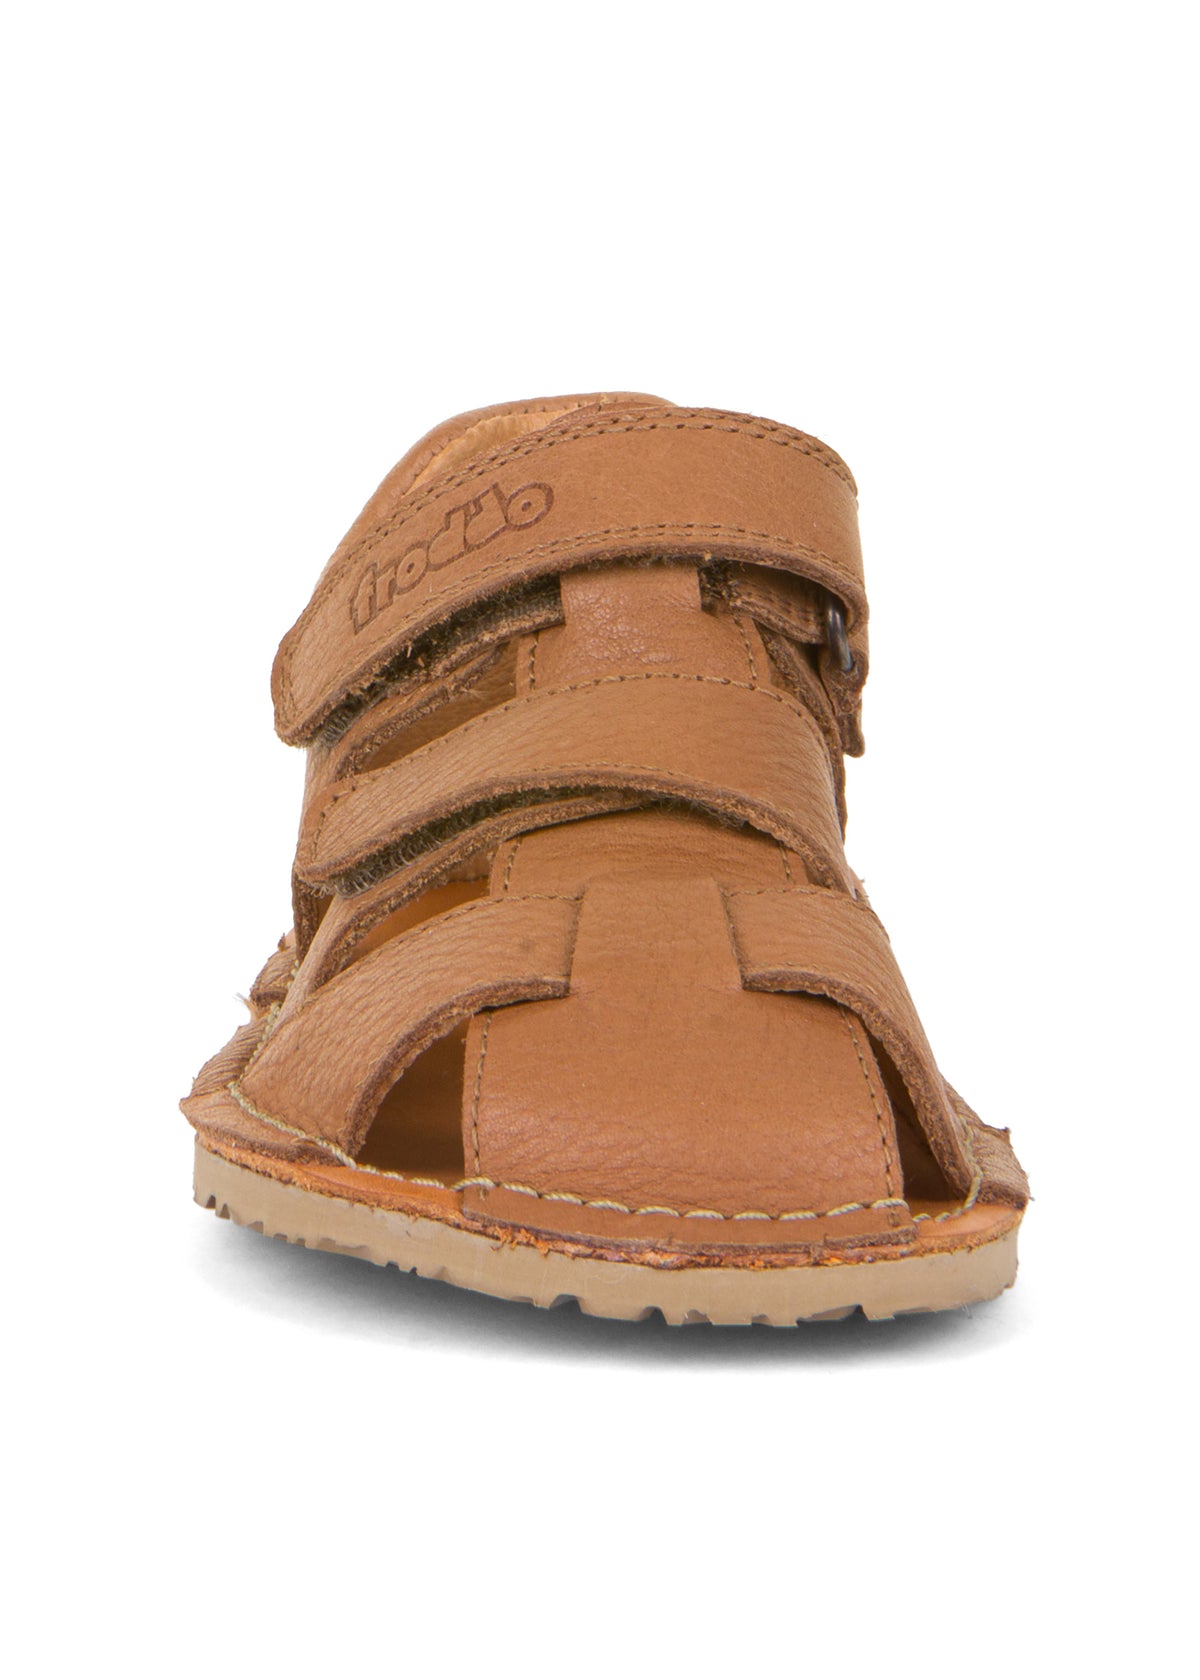 Children's barefoot sandals, Flexy Avi - cognac brown